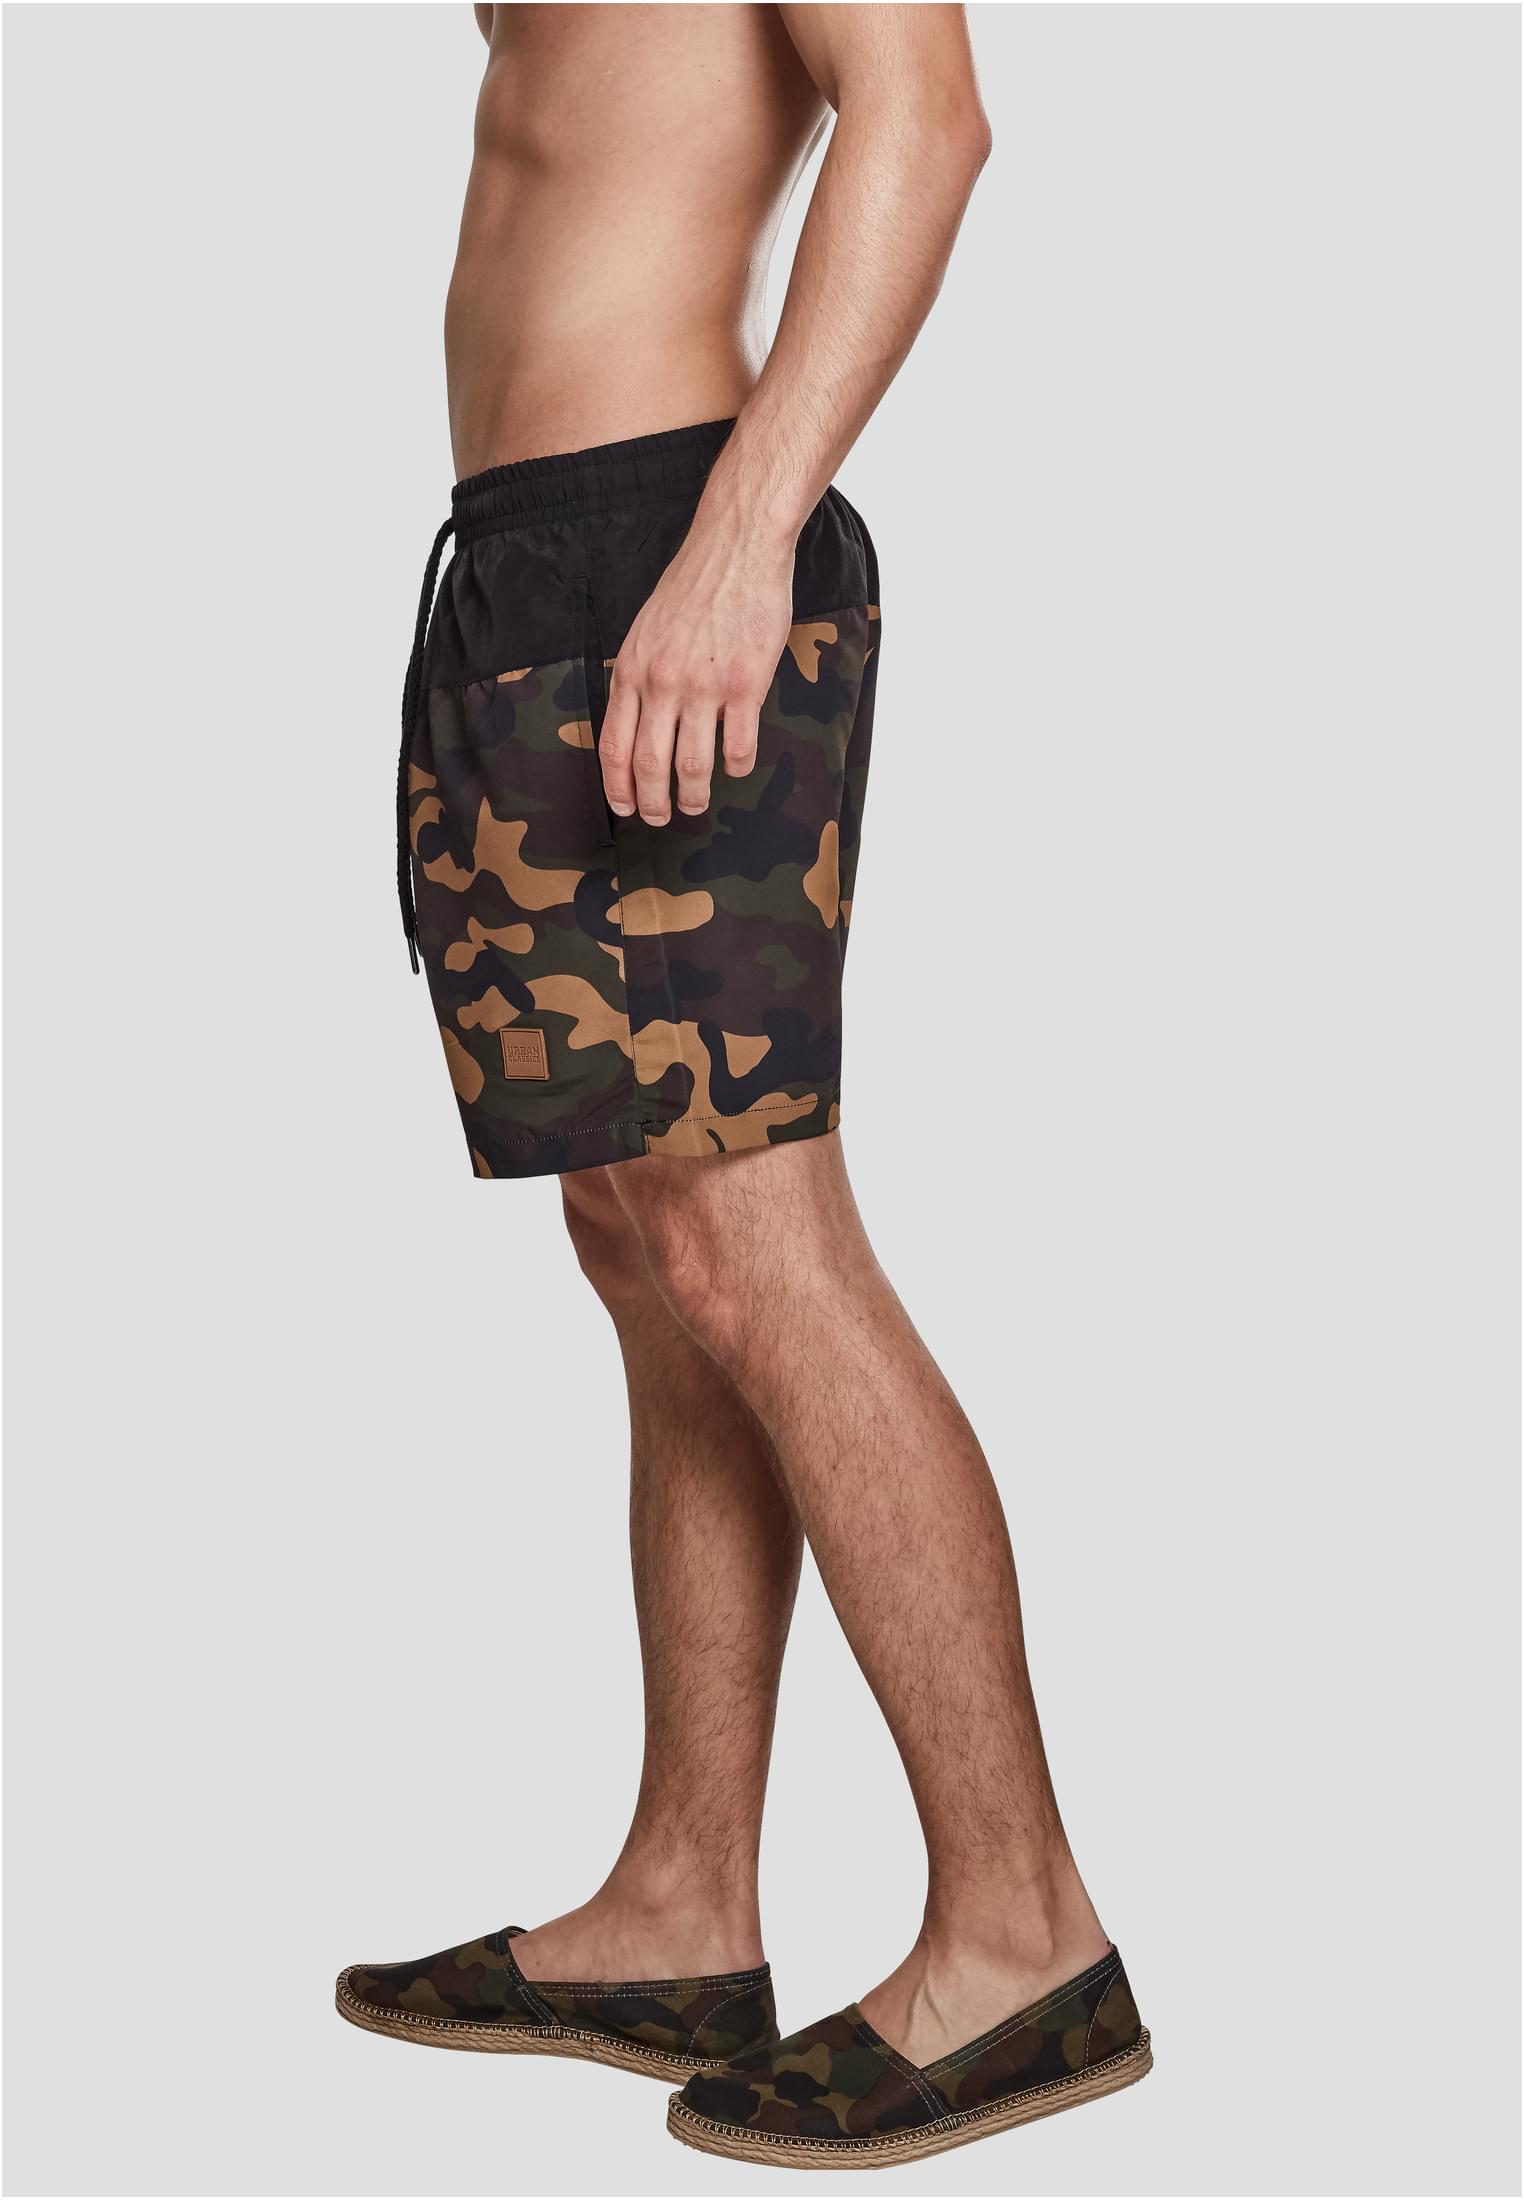 Plus Size Block Swim Shorts in Farbe blk/woodcamo